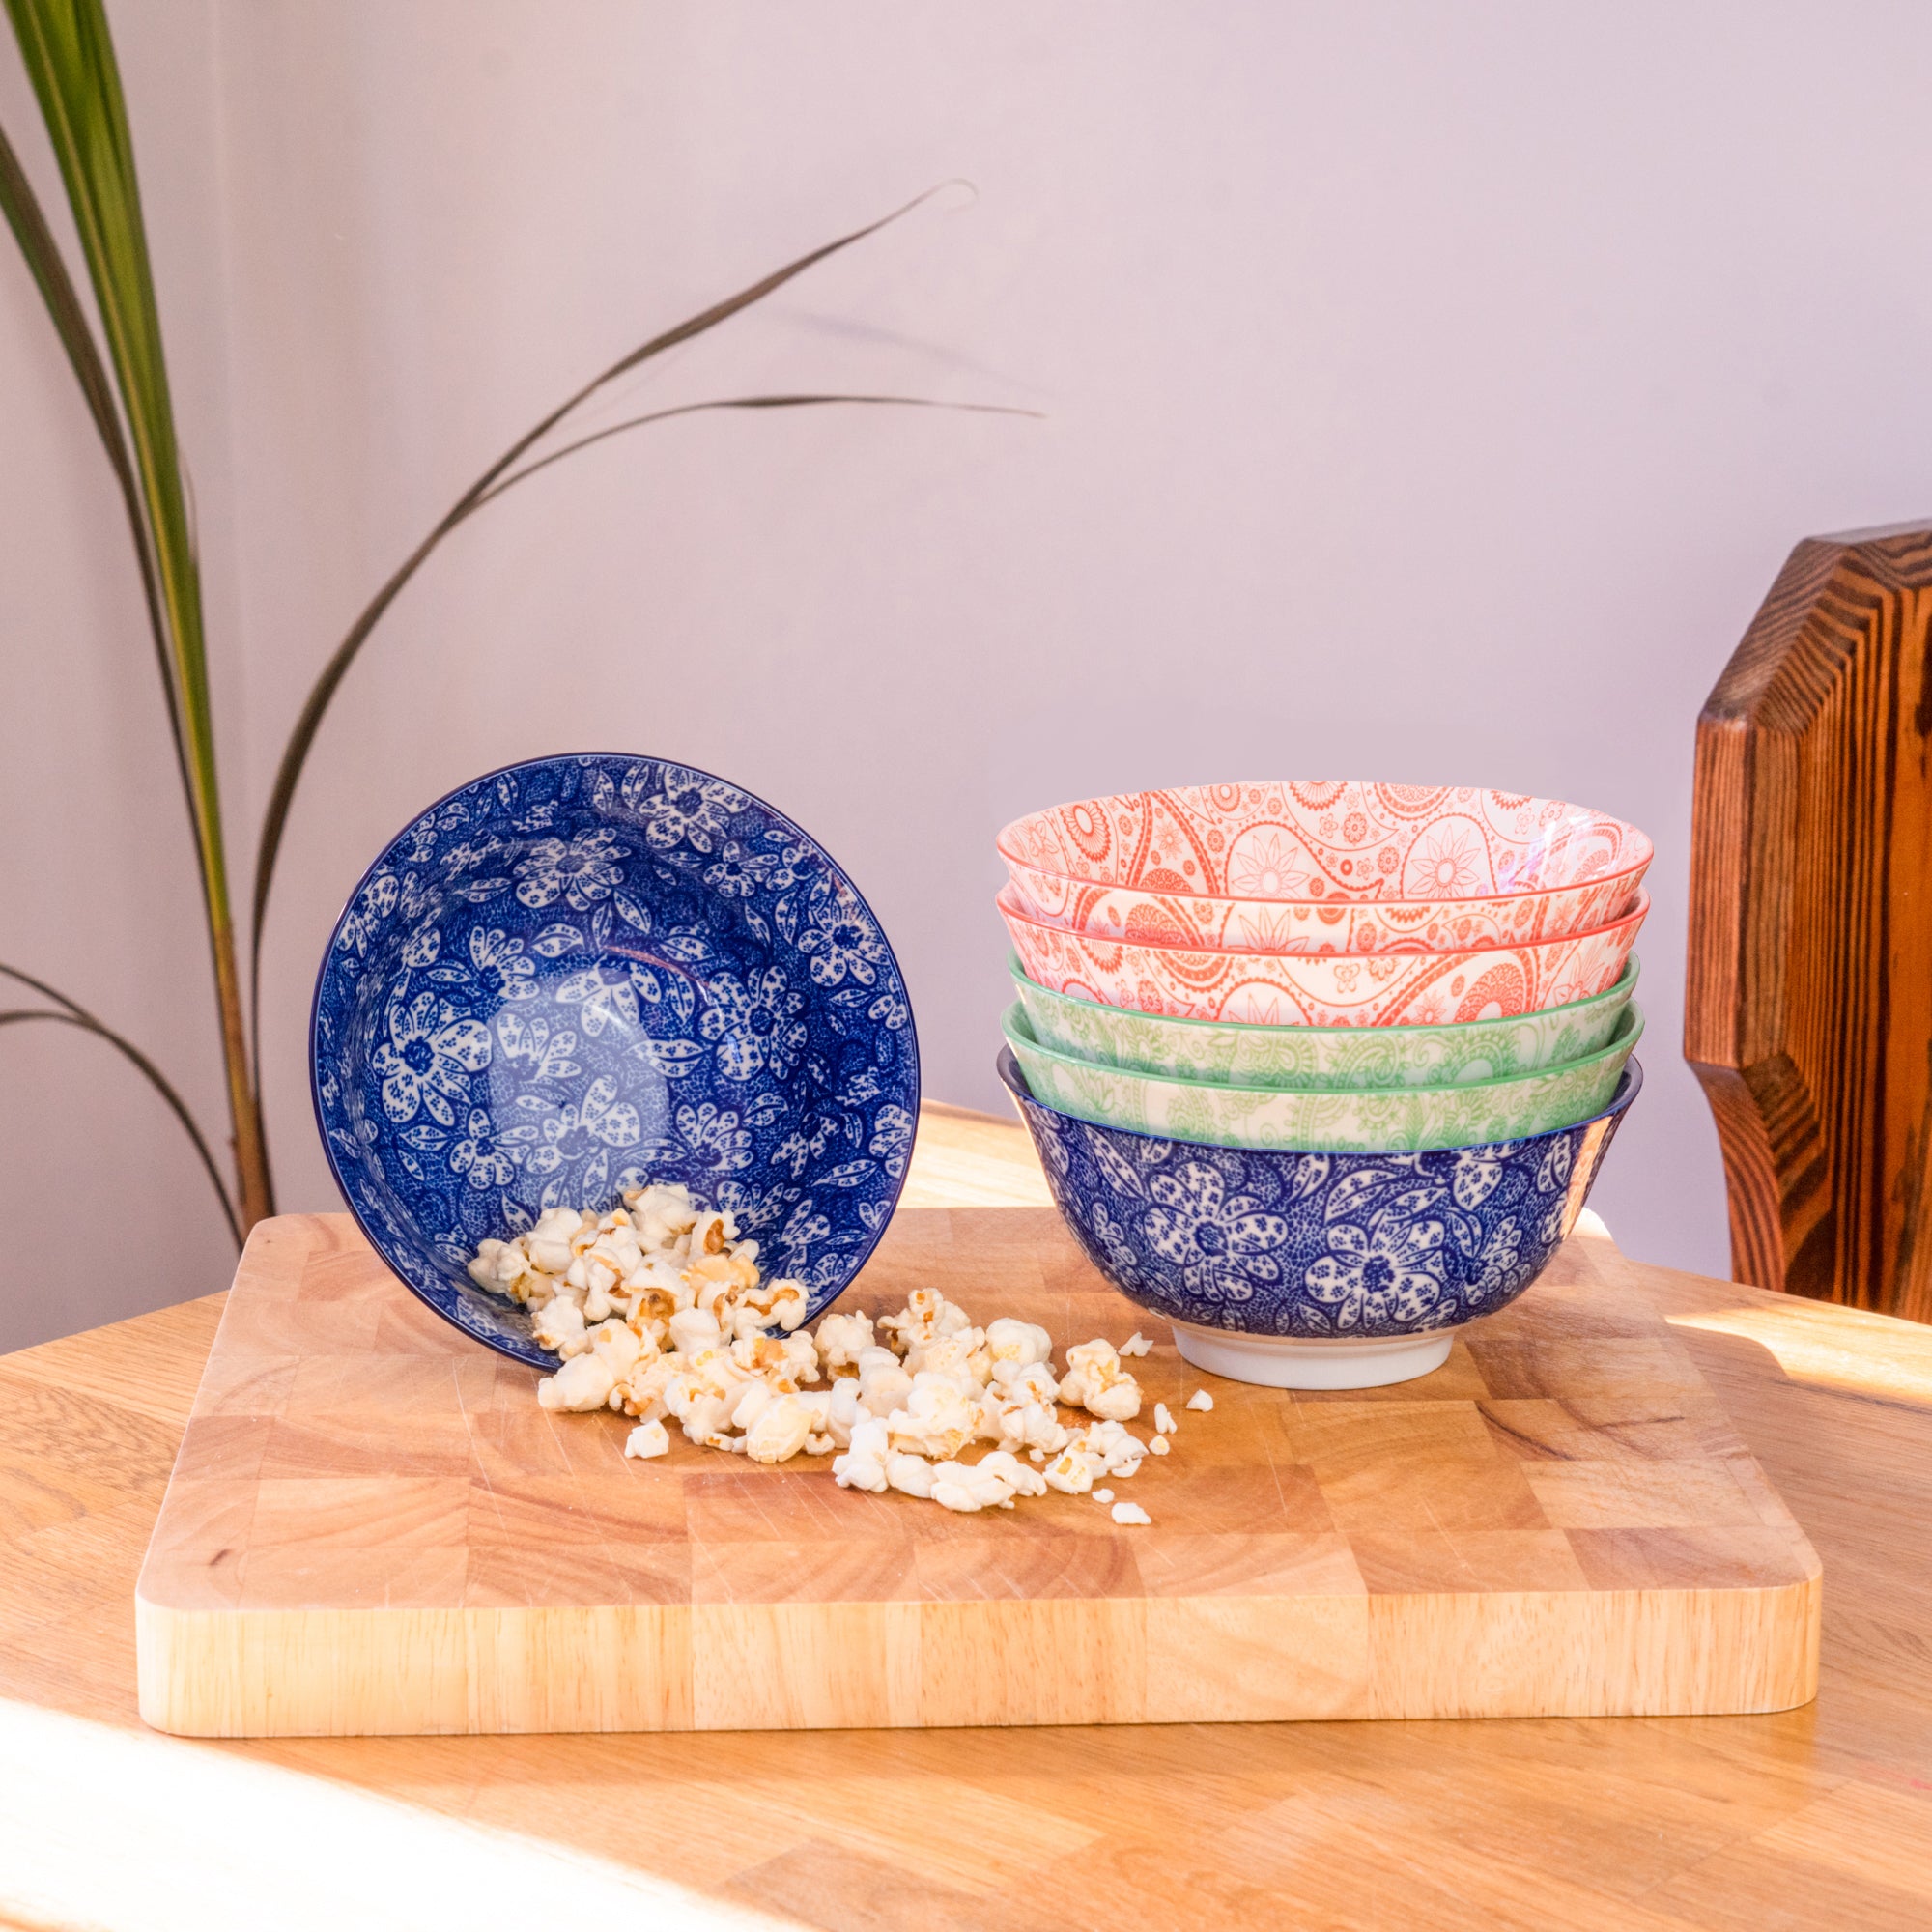 Nicola Spring Patterned Crockery Plates Bowls Mugs Sets Floral Paisley Print